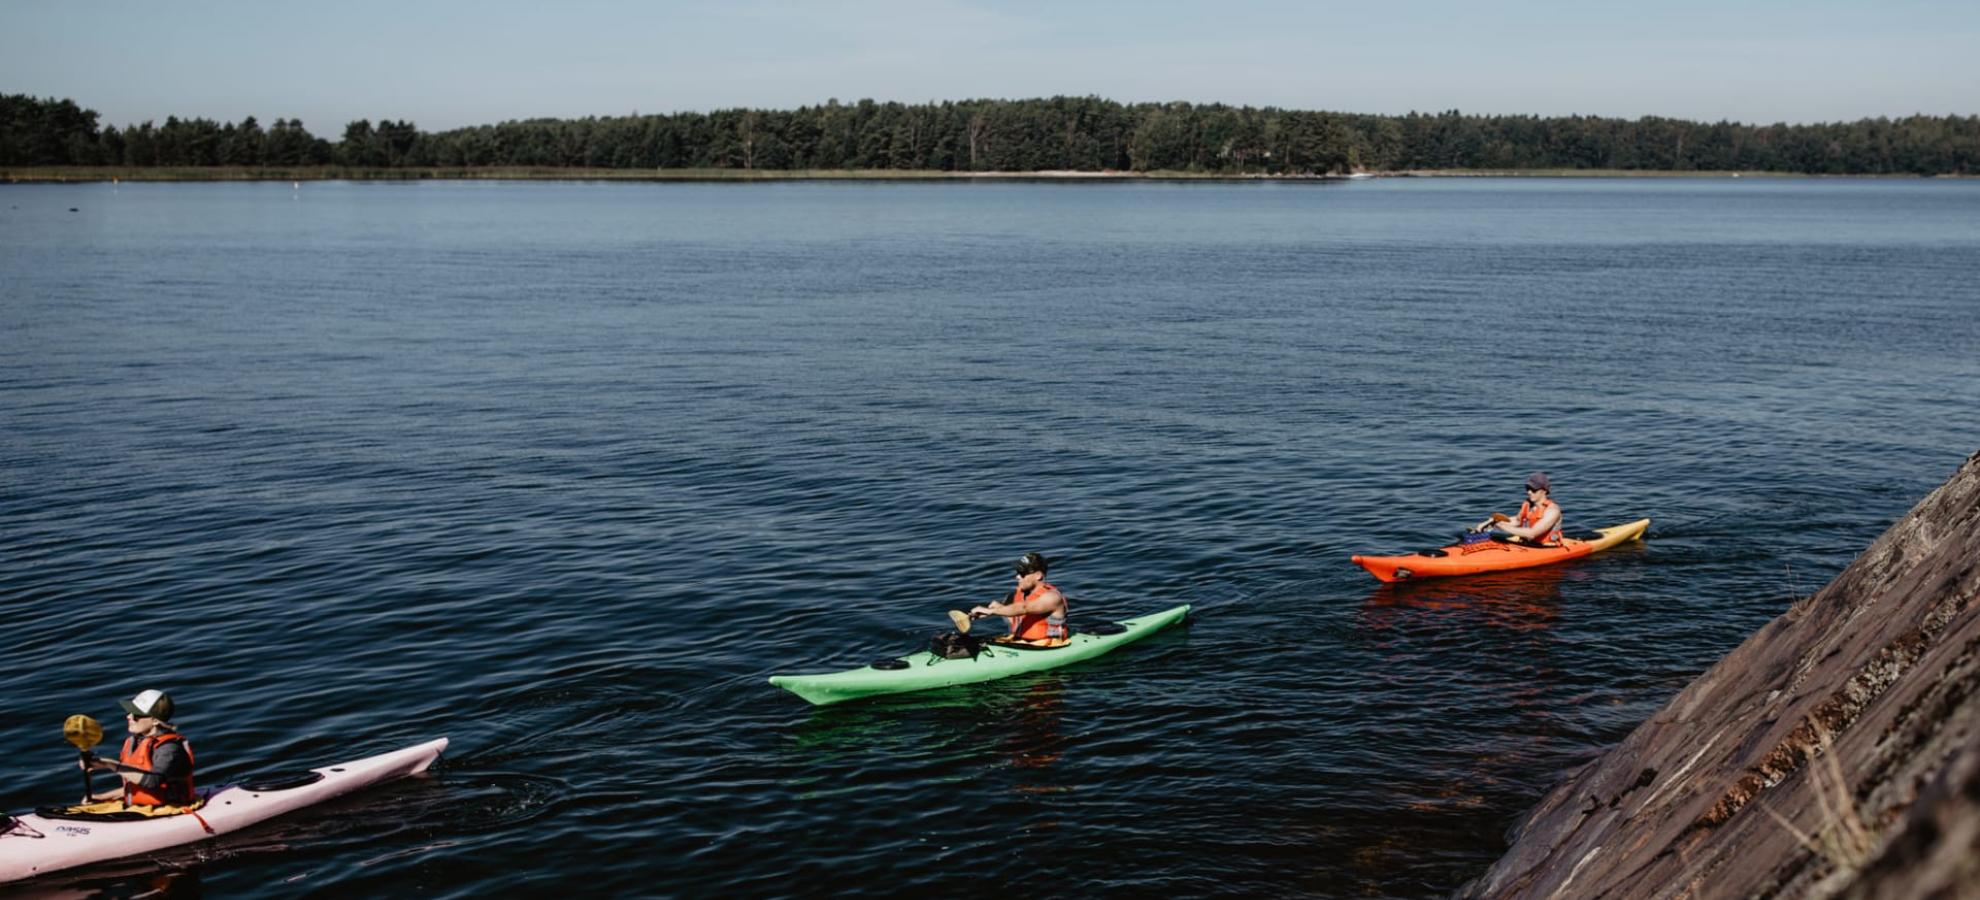 Kayaking in the archipelago of Helsinki